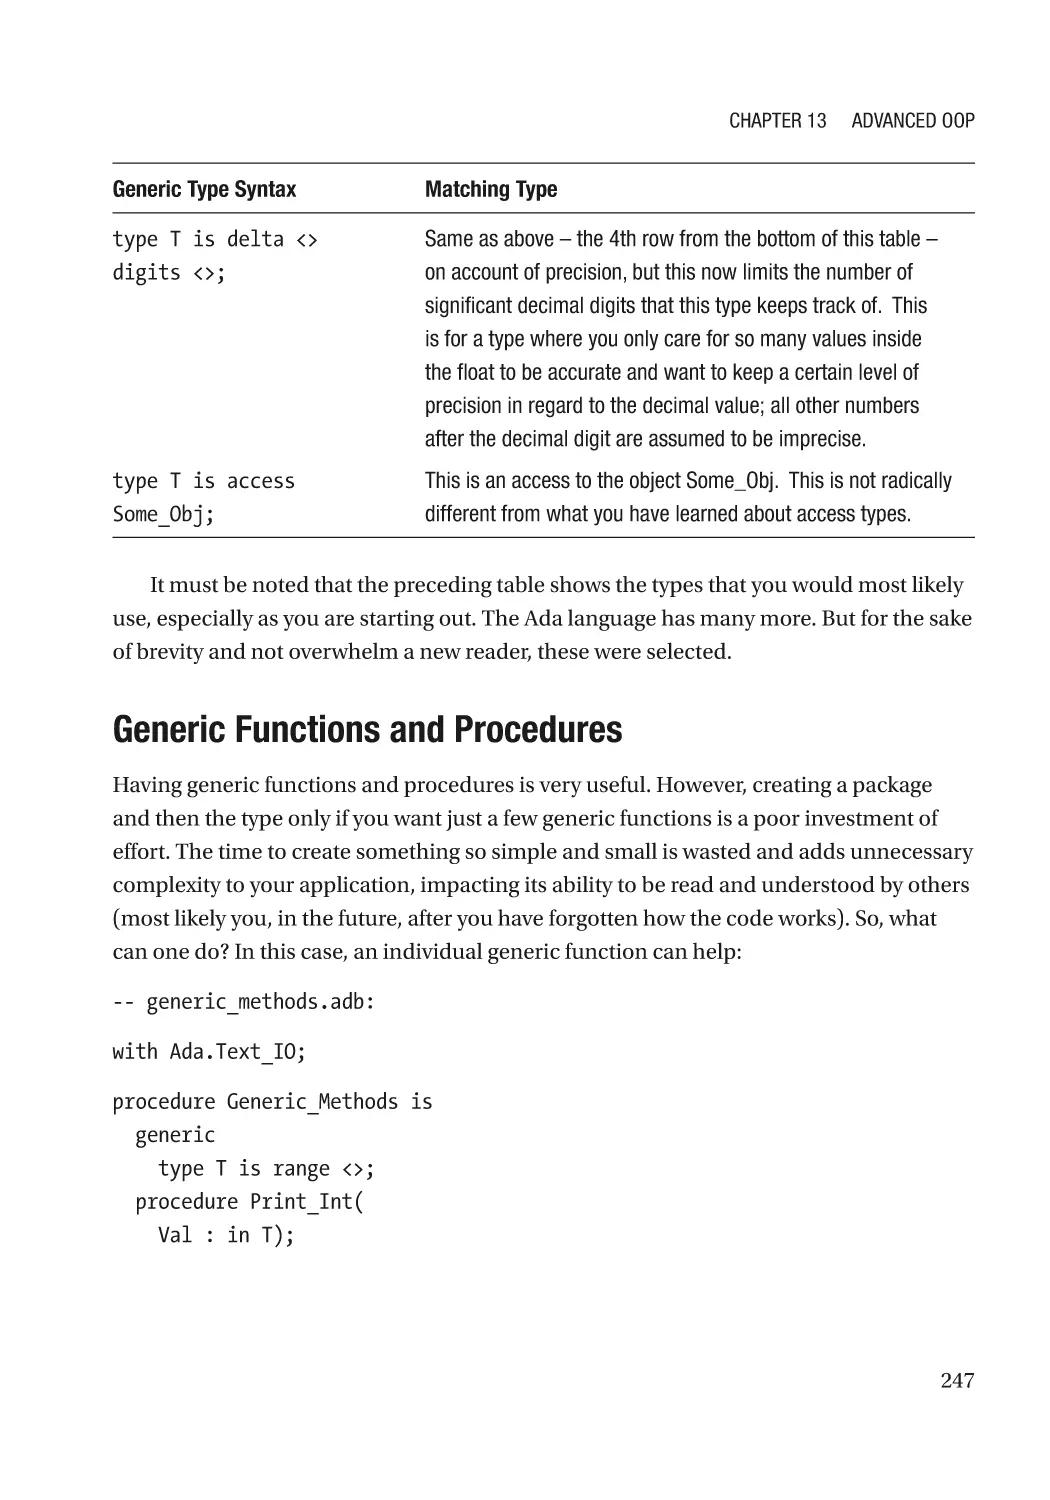 Generic Functions and Procedures